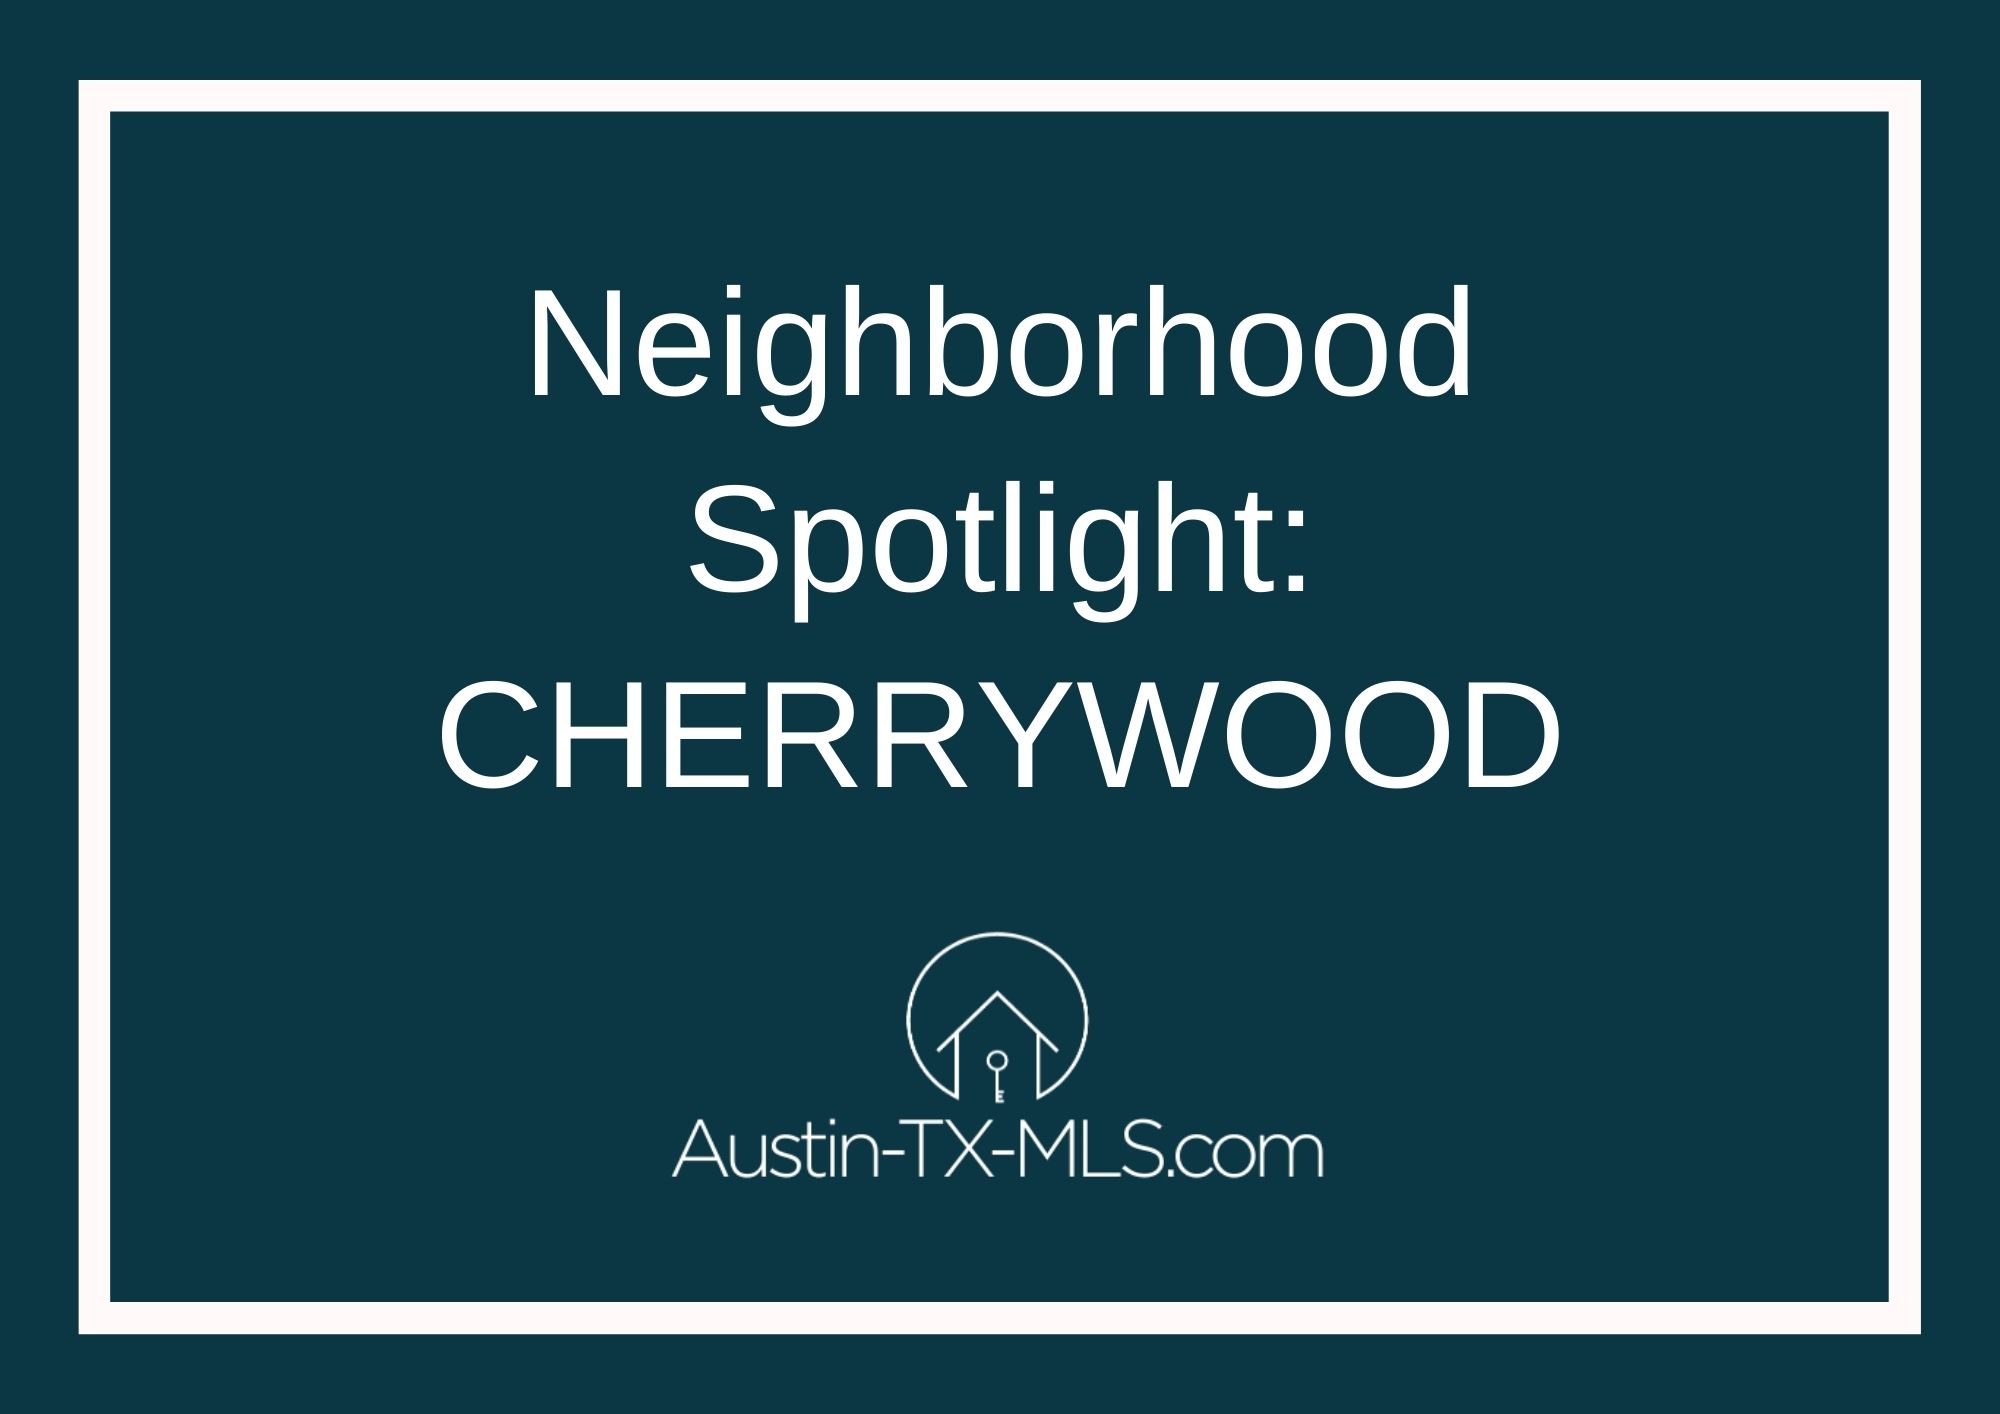 Cherrywood Neighborhood Spotlight Austin Texas real estate